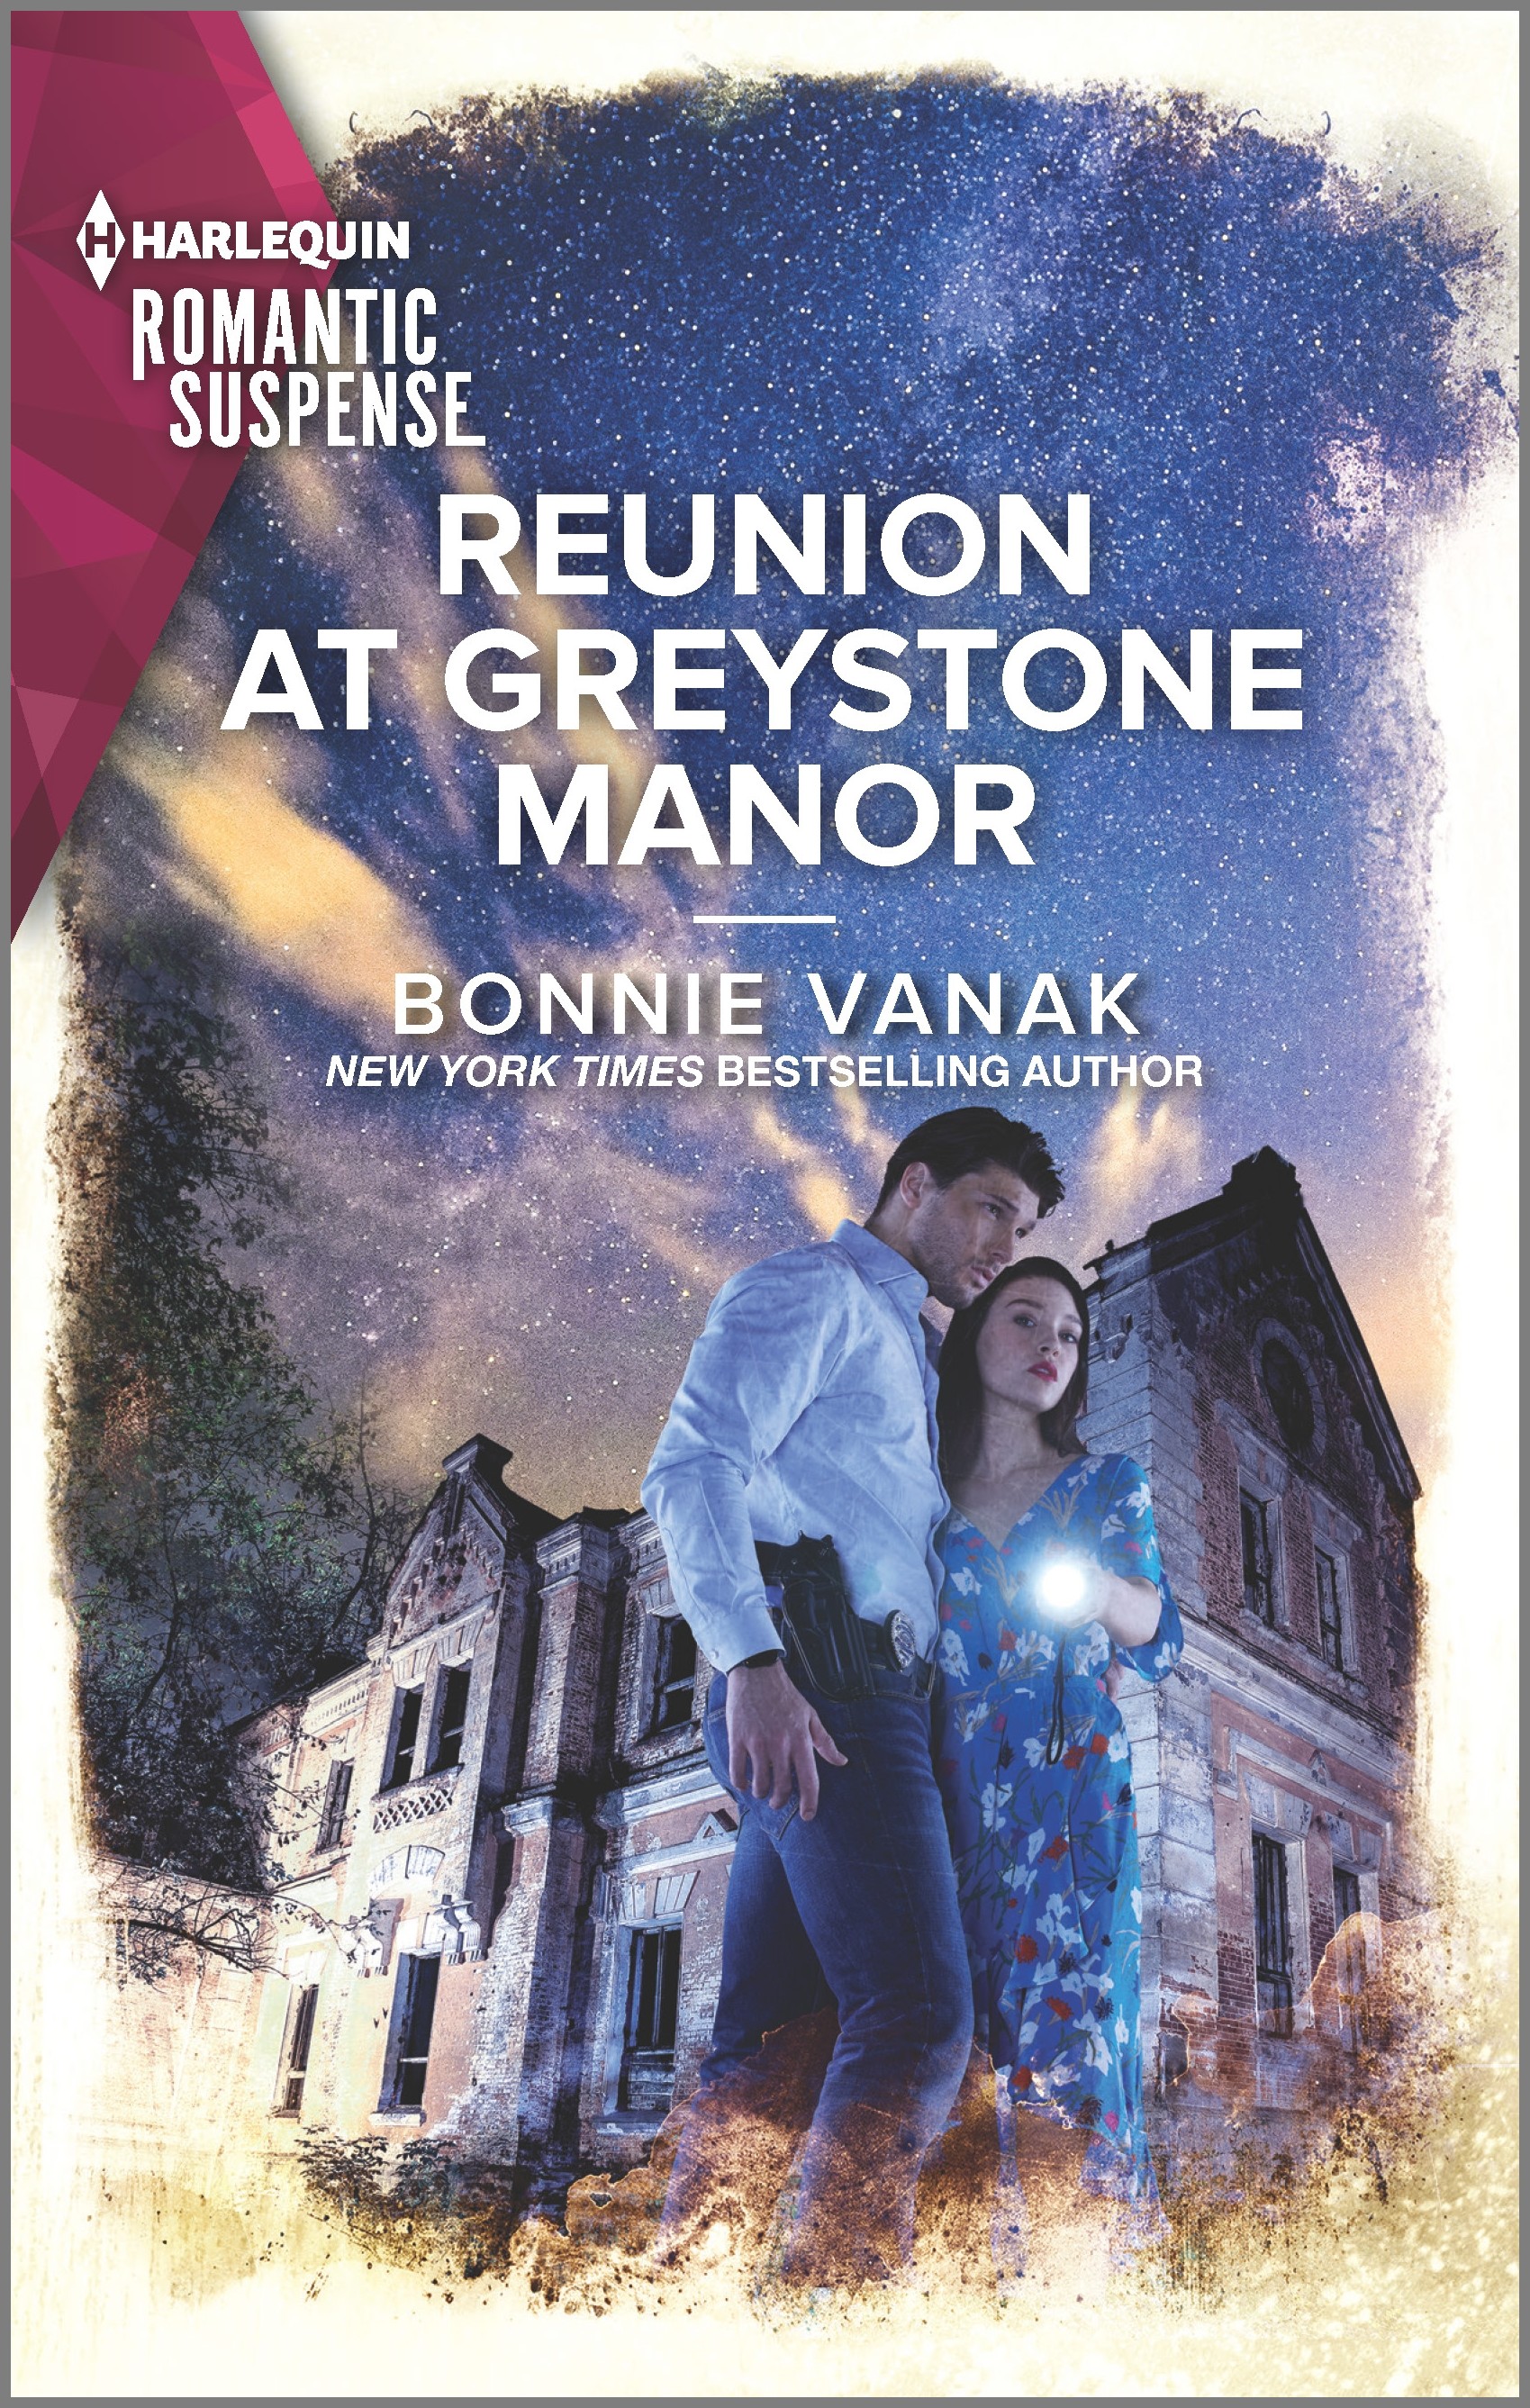 REUNION AT GREYSTONE MANOR by Bonnie Vanak